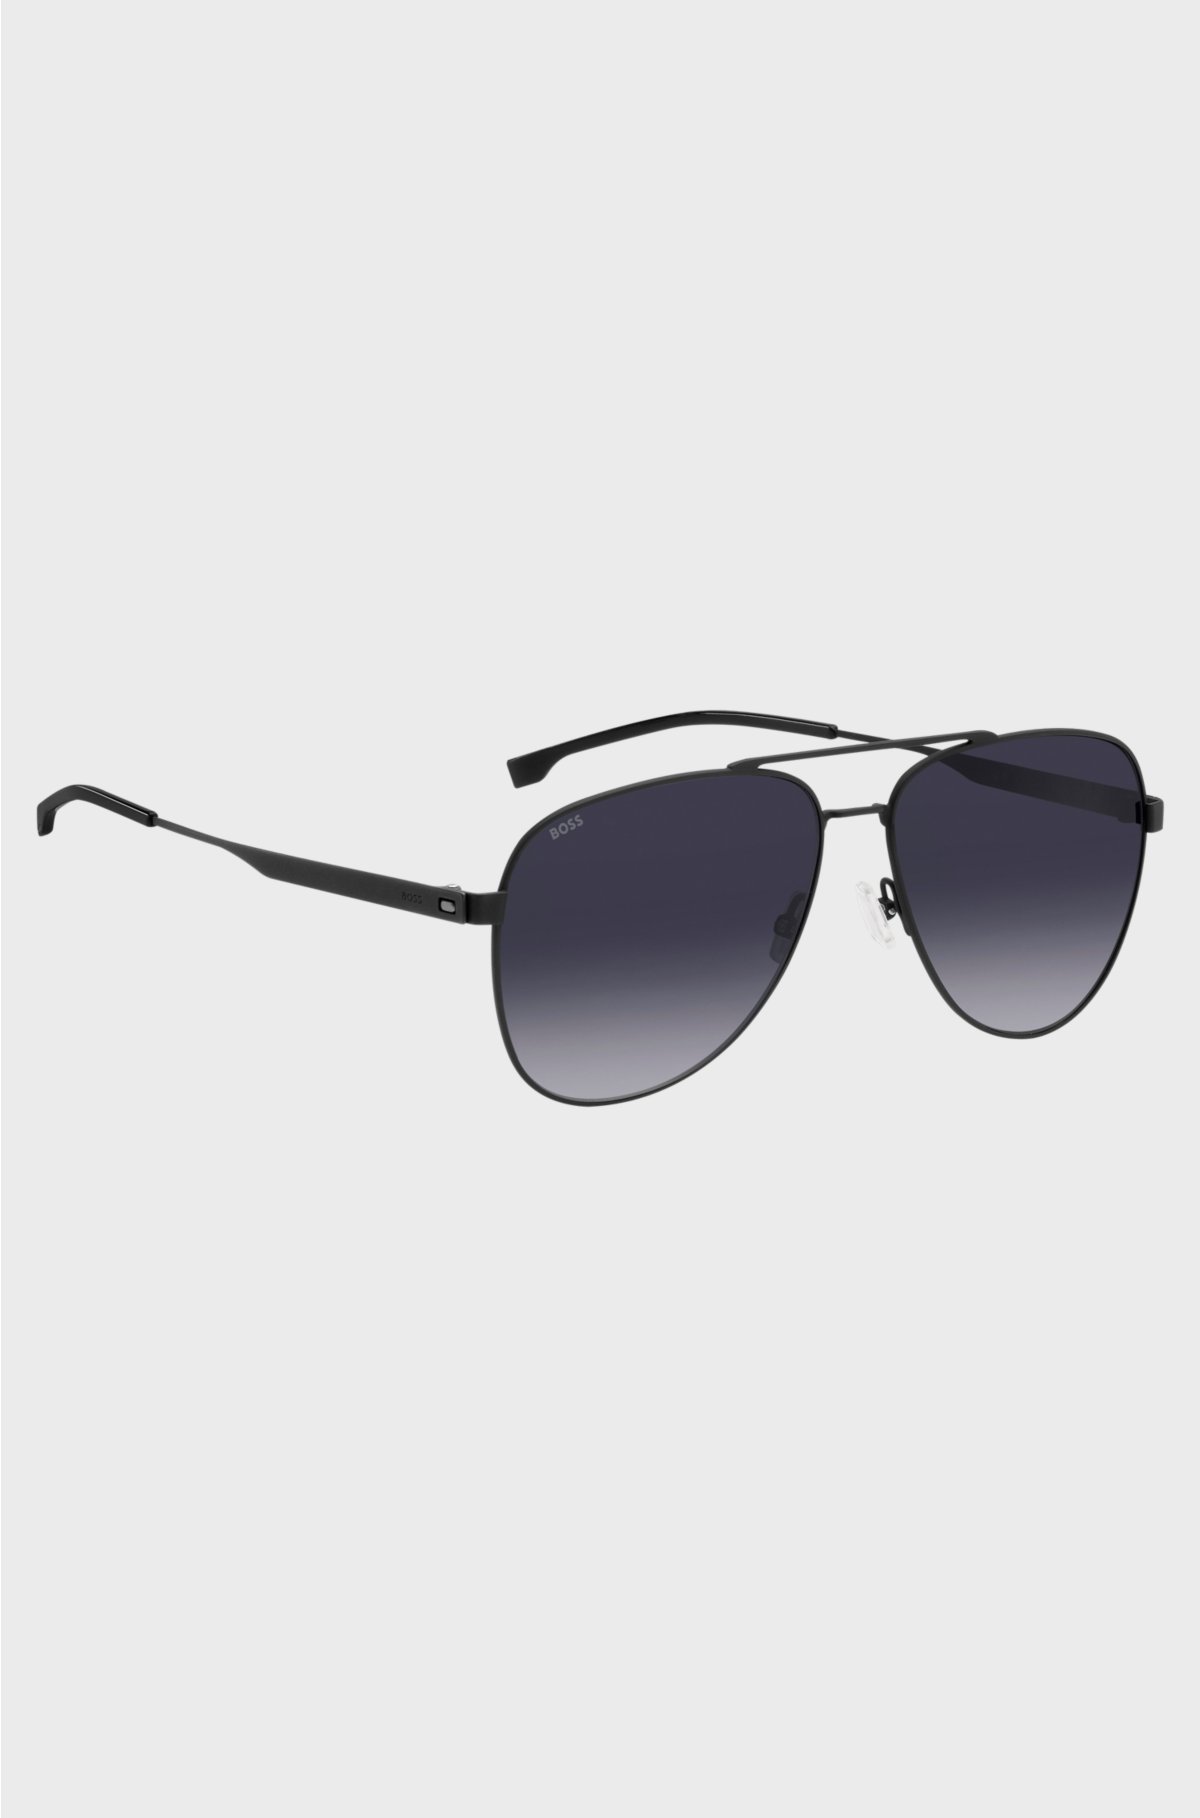 Black-steel sunglasses with double bridge, Black